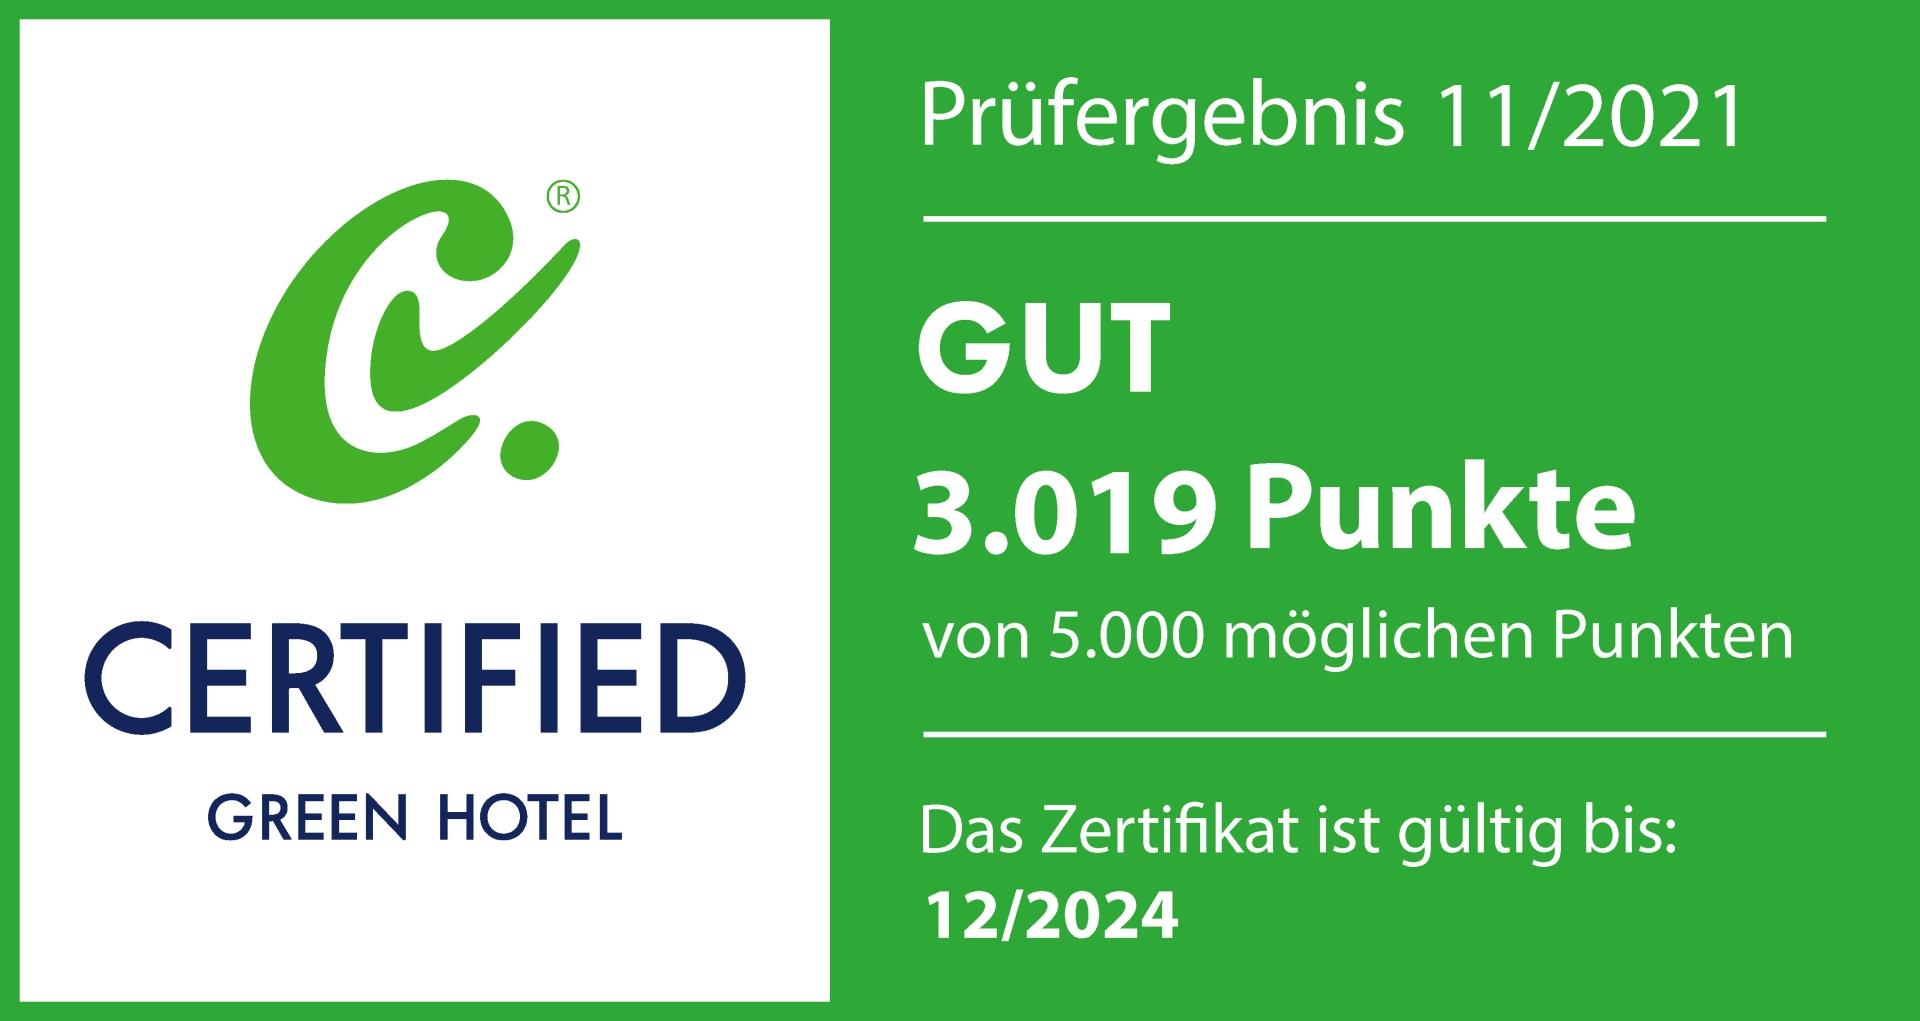 Certified Green Hotel in Dresden